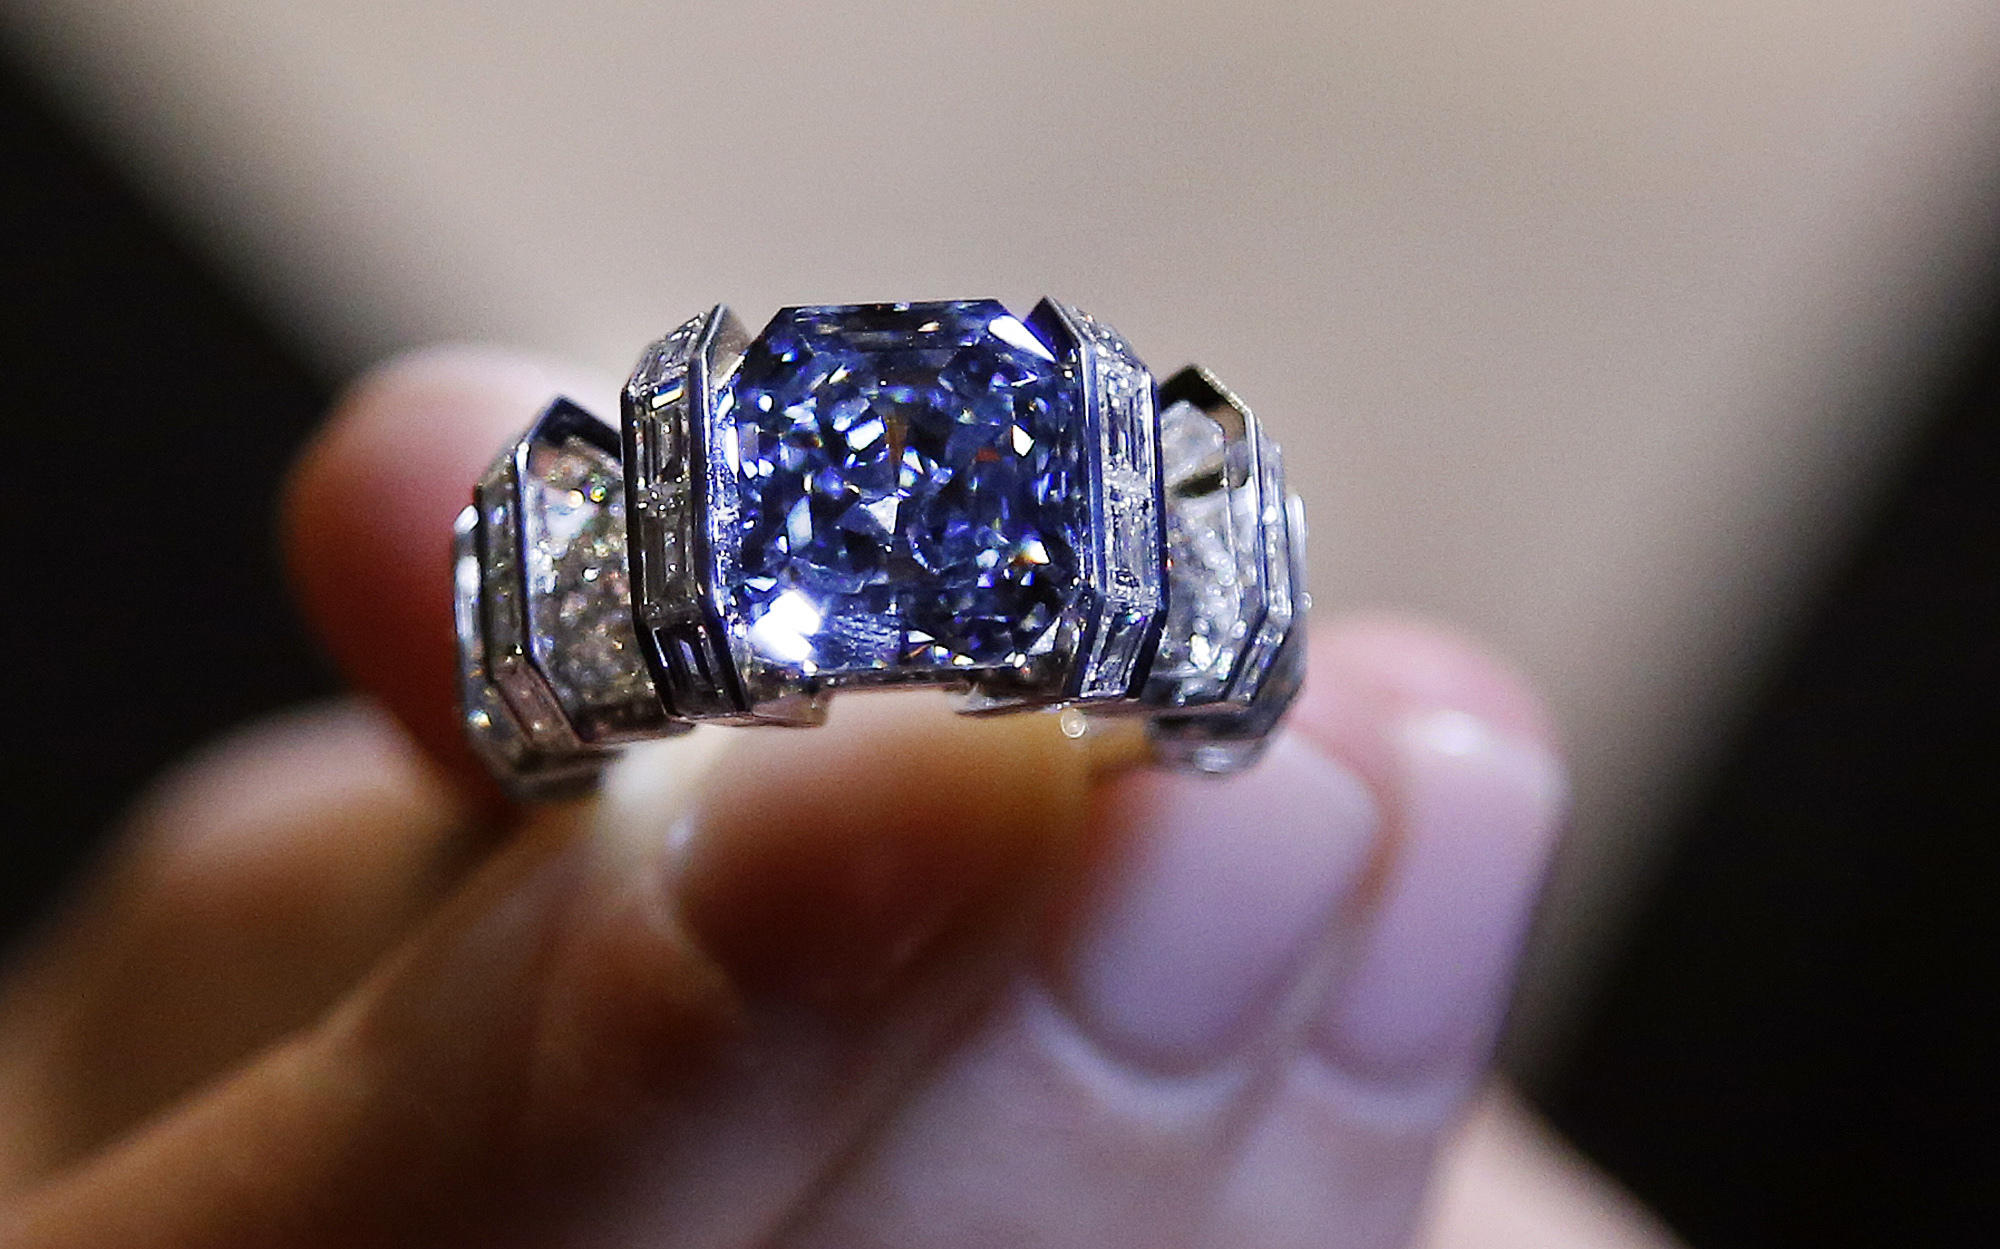 Blue diamond ring could fetch $25 million - CBS News